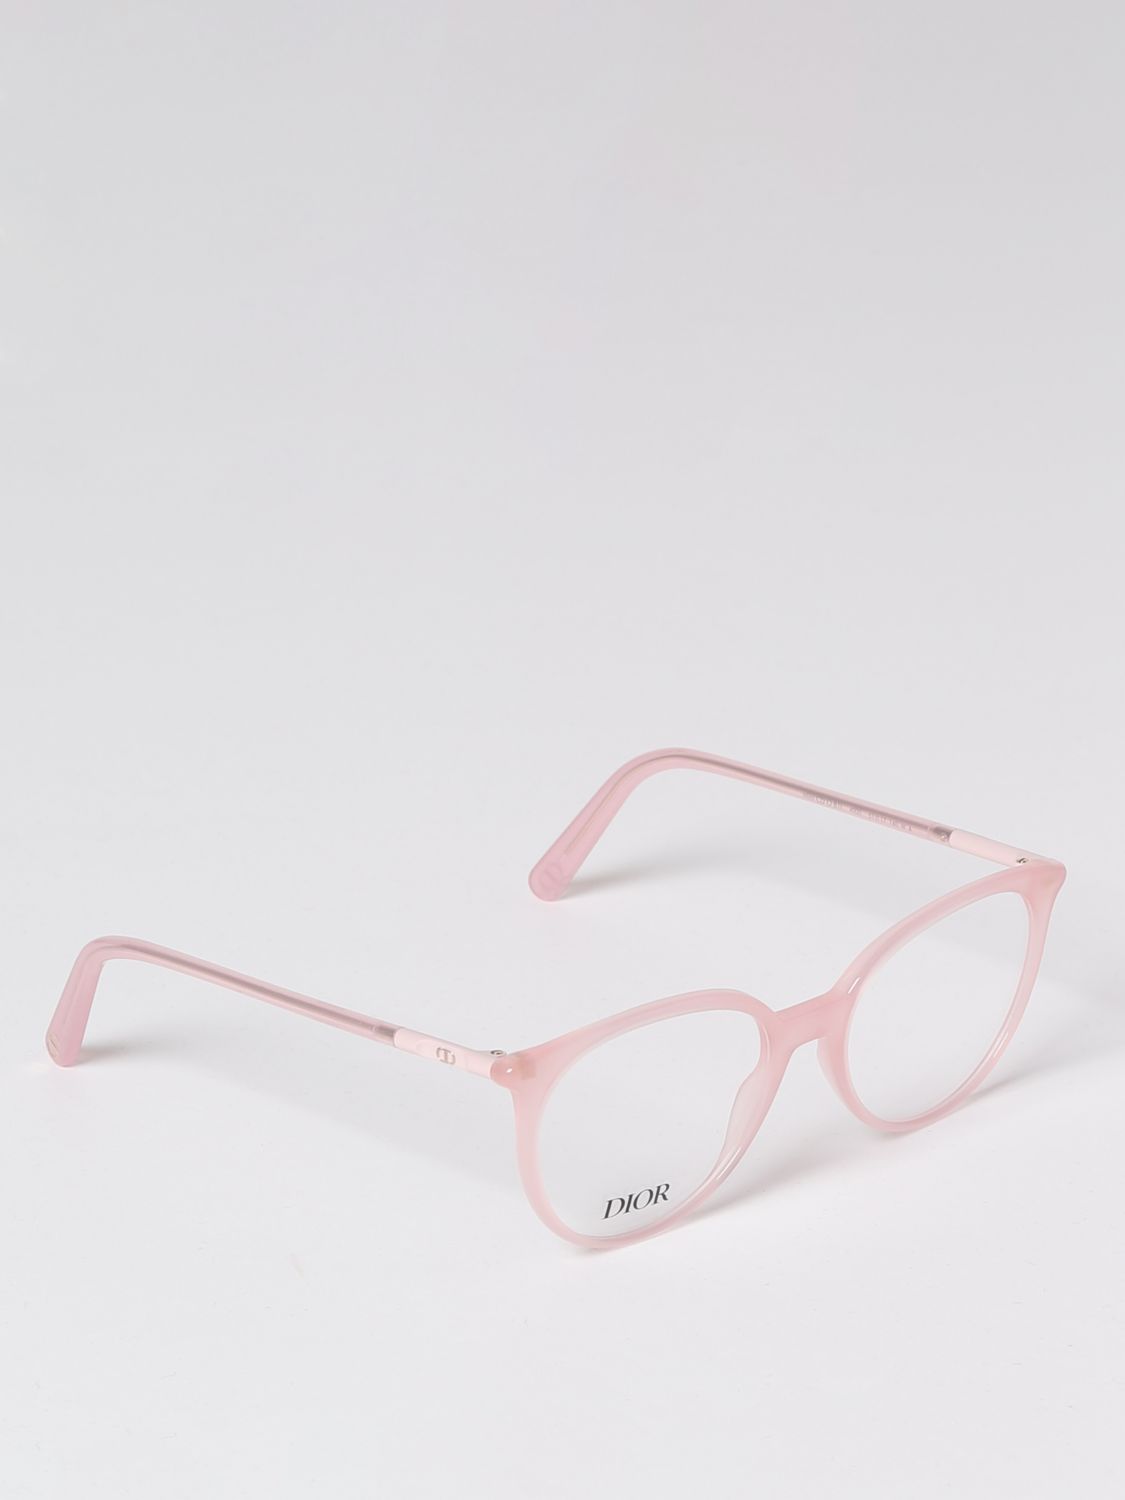 Dior Signature Squareframe Acetate Optical Glasses  Tortoiseshell   Editorialist